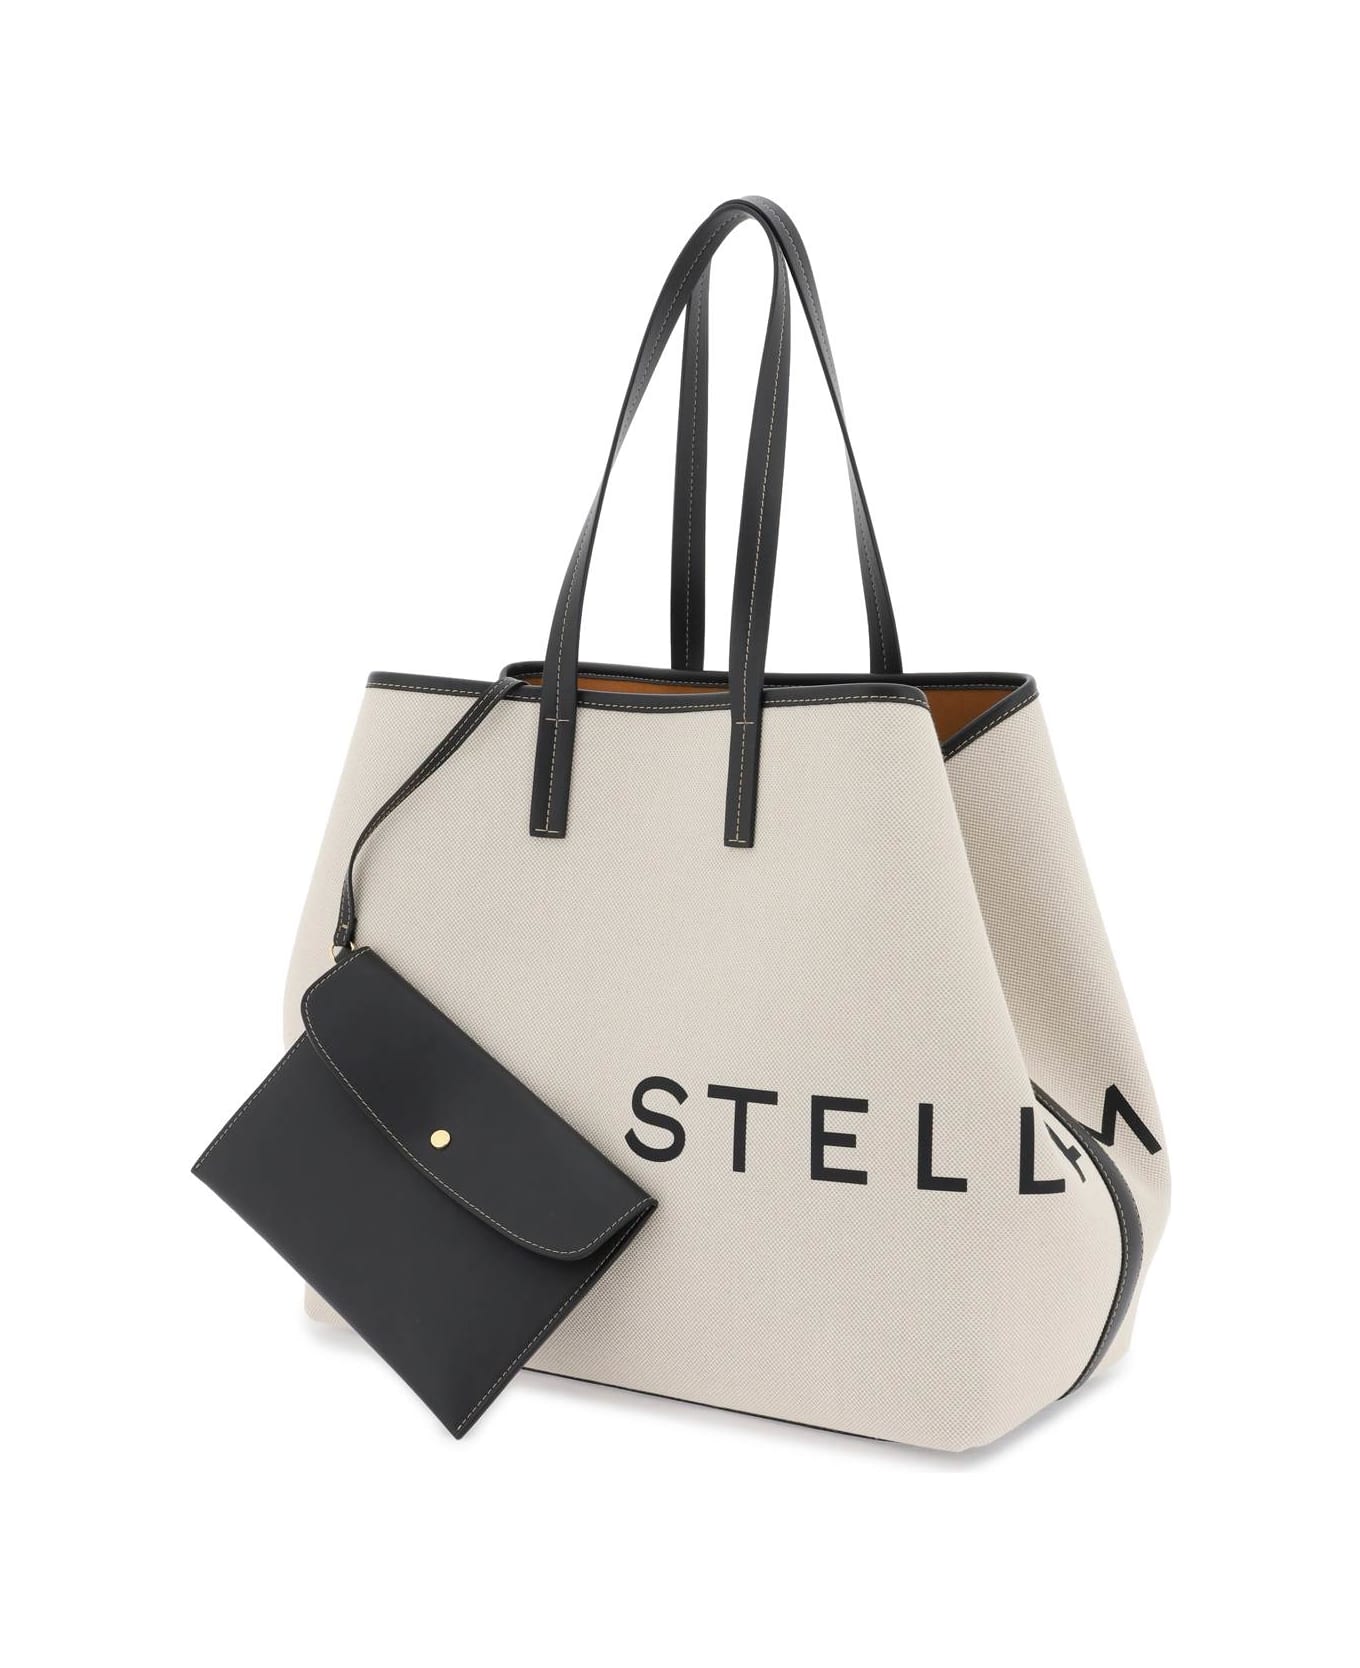 Stella McCartney Canvas Tote Bag - ECRU (White)